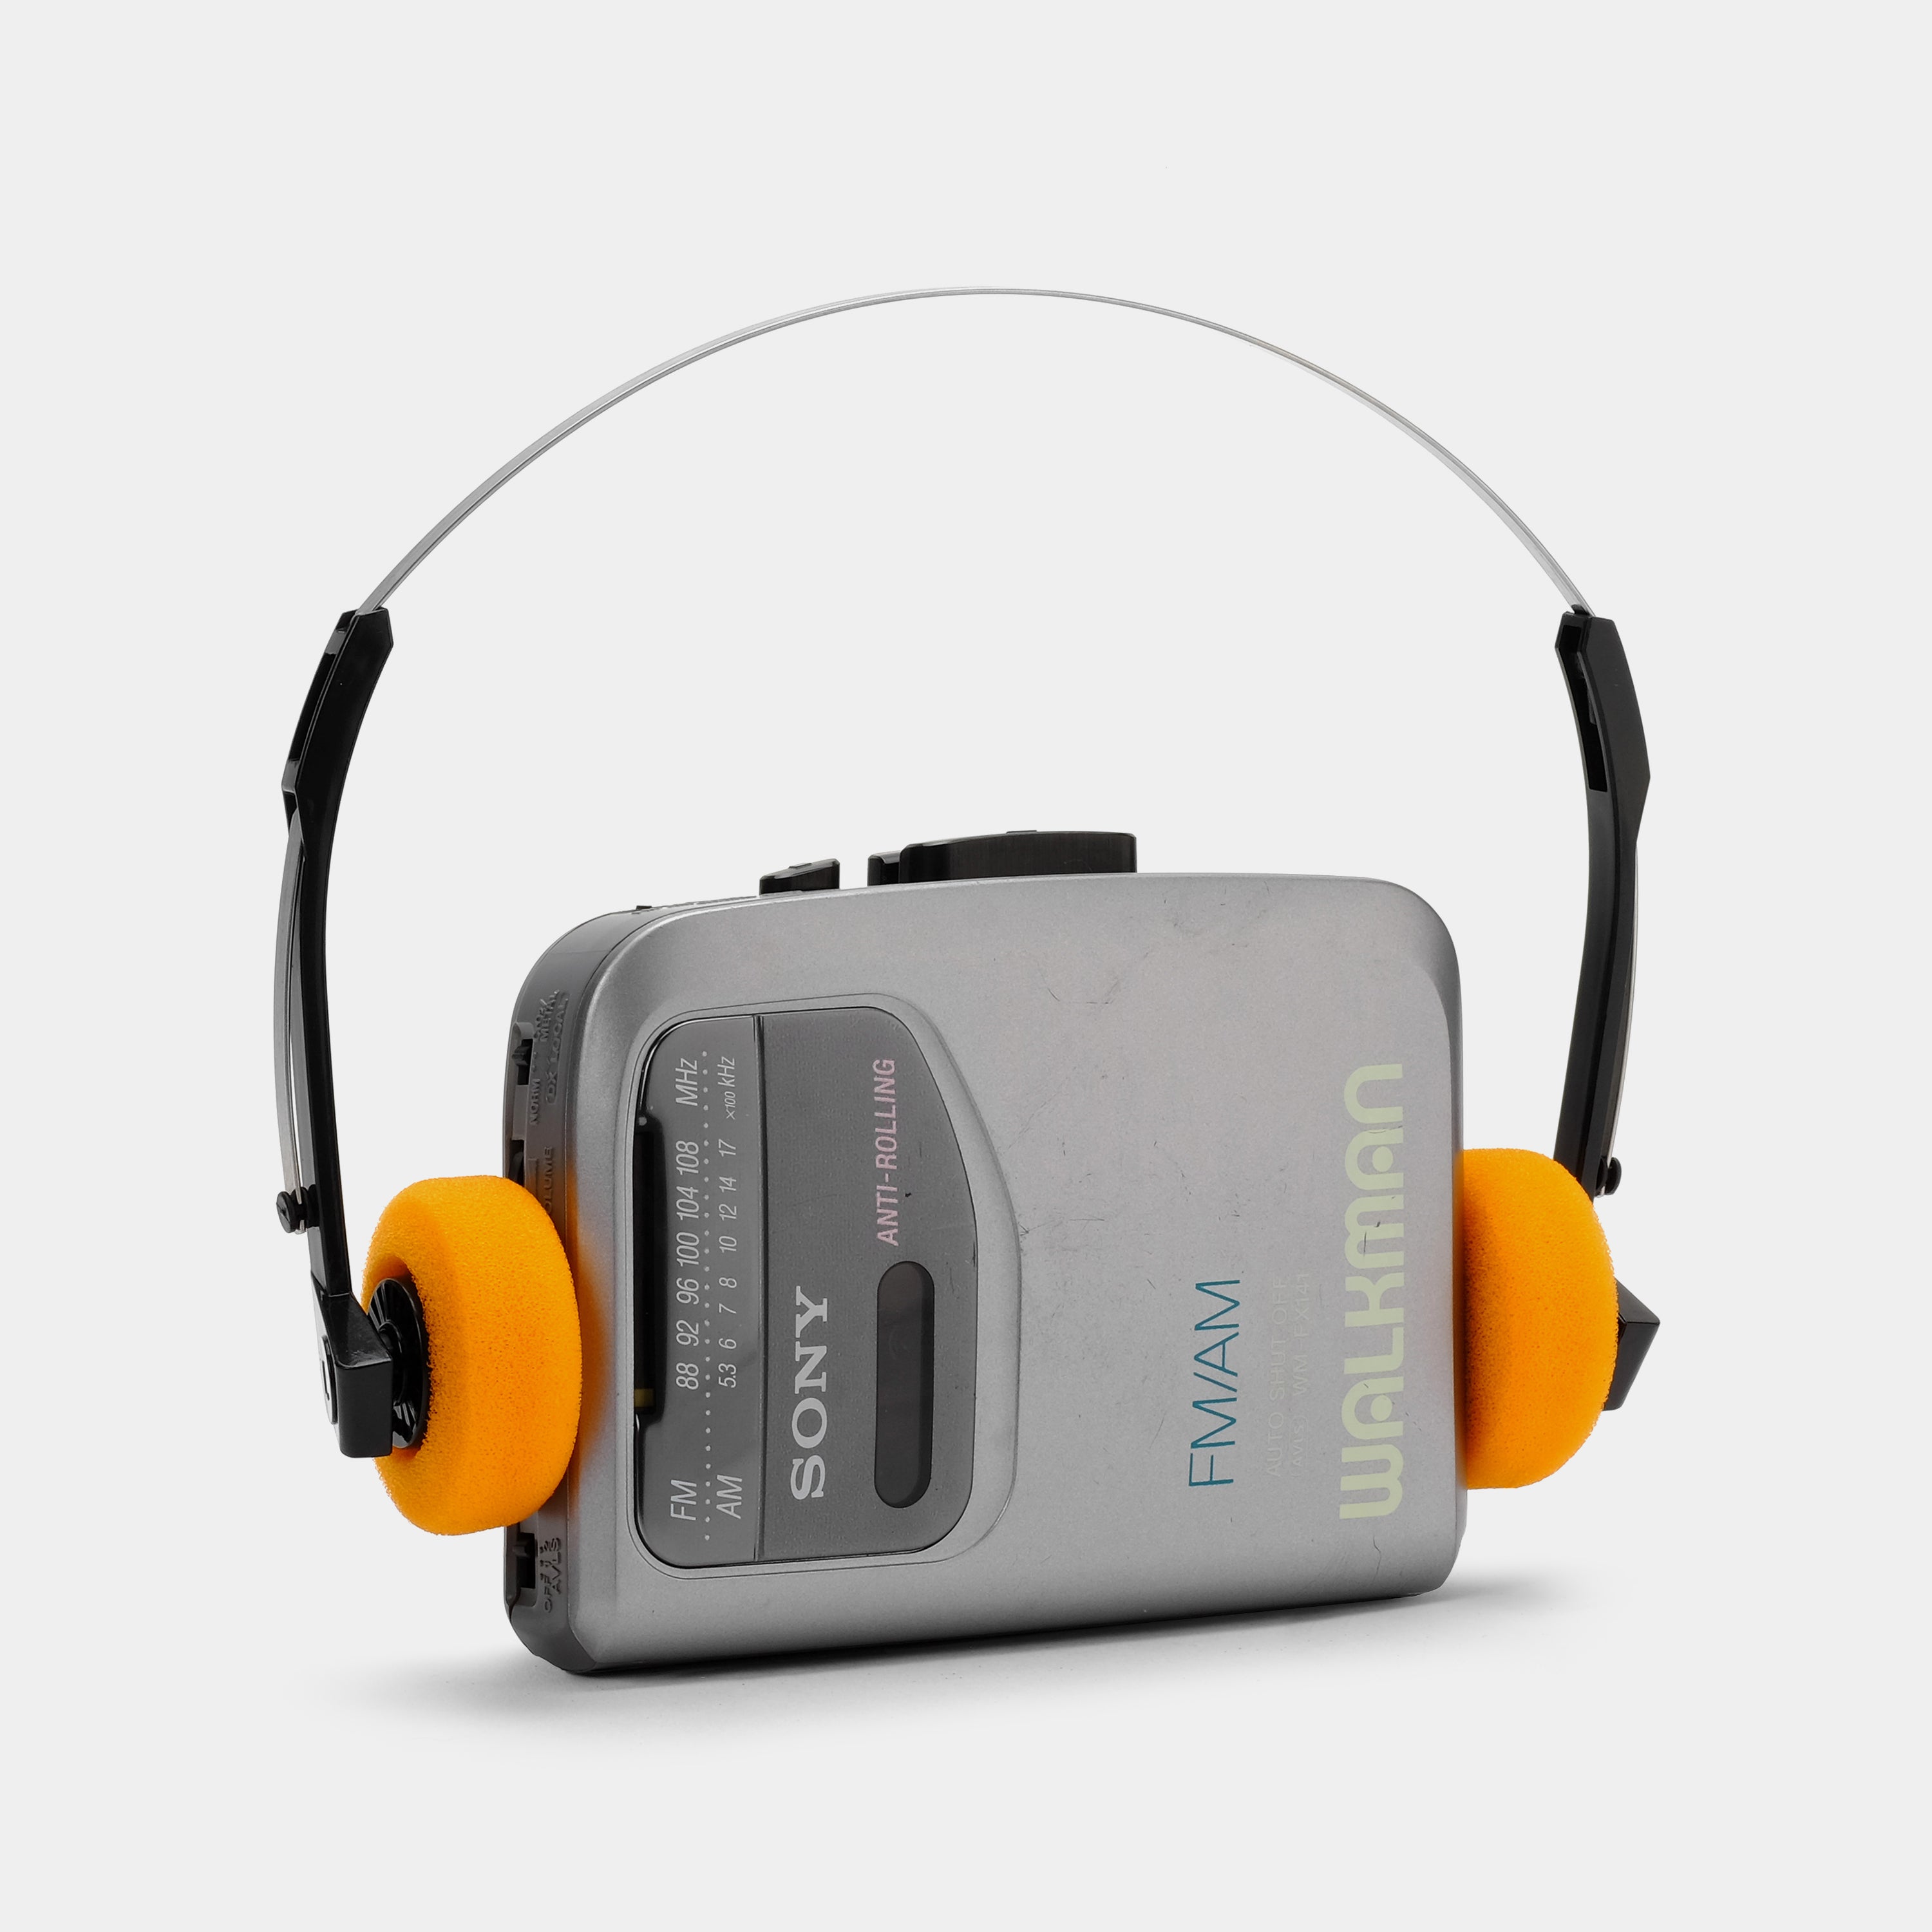 Comprar Sony Walkman AVLS WM-EX122 Portable Cassette Player en USA